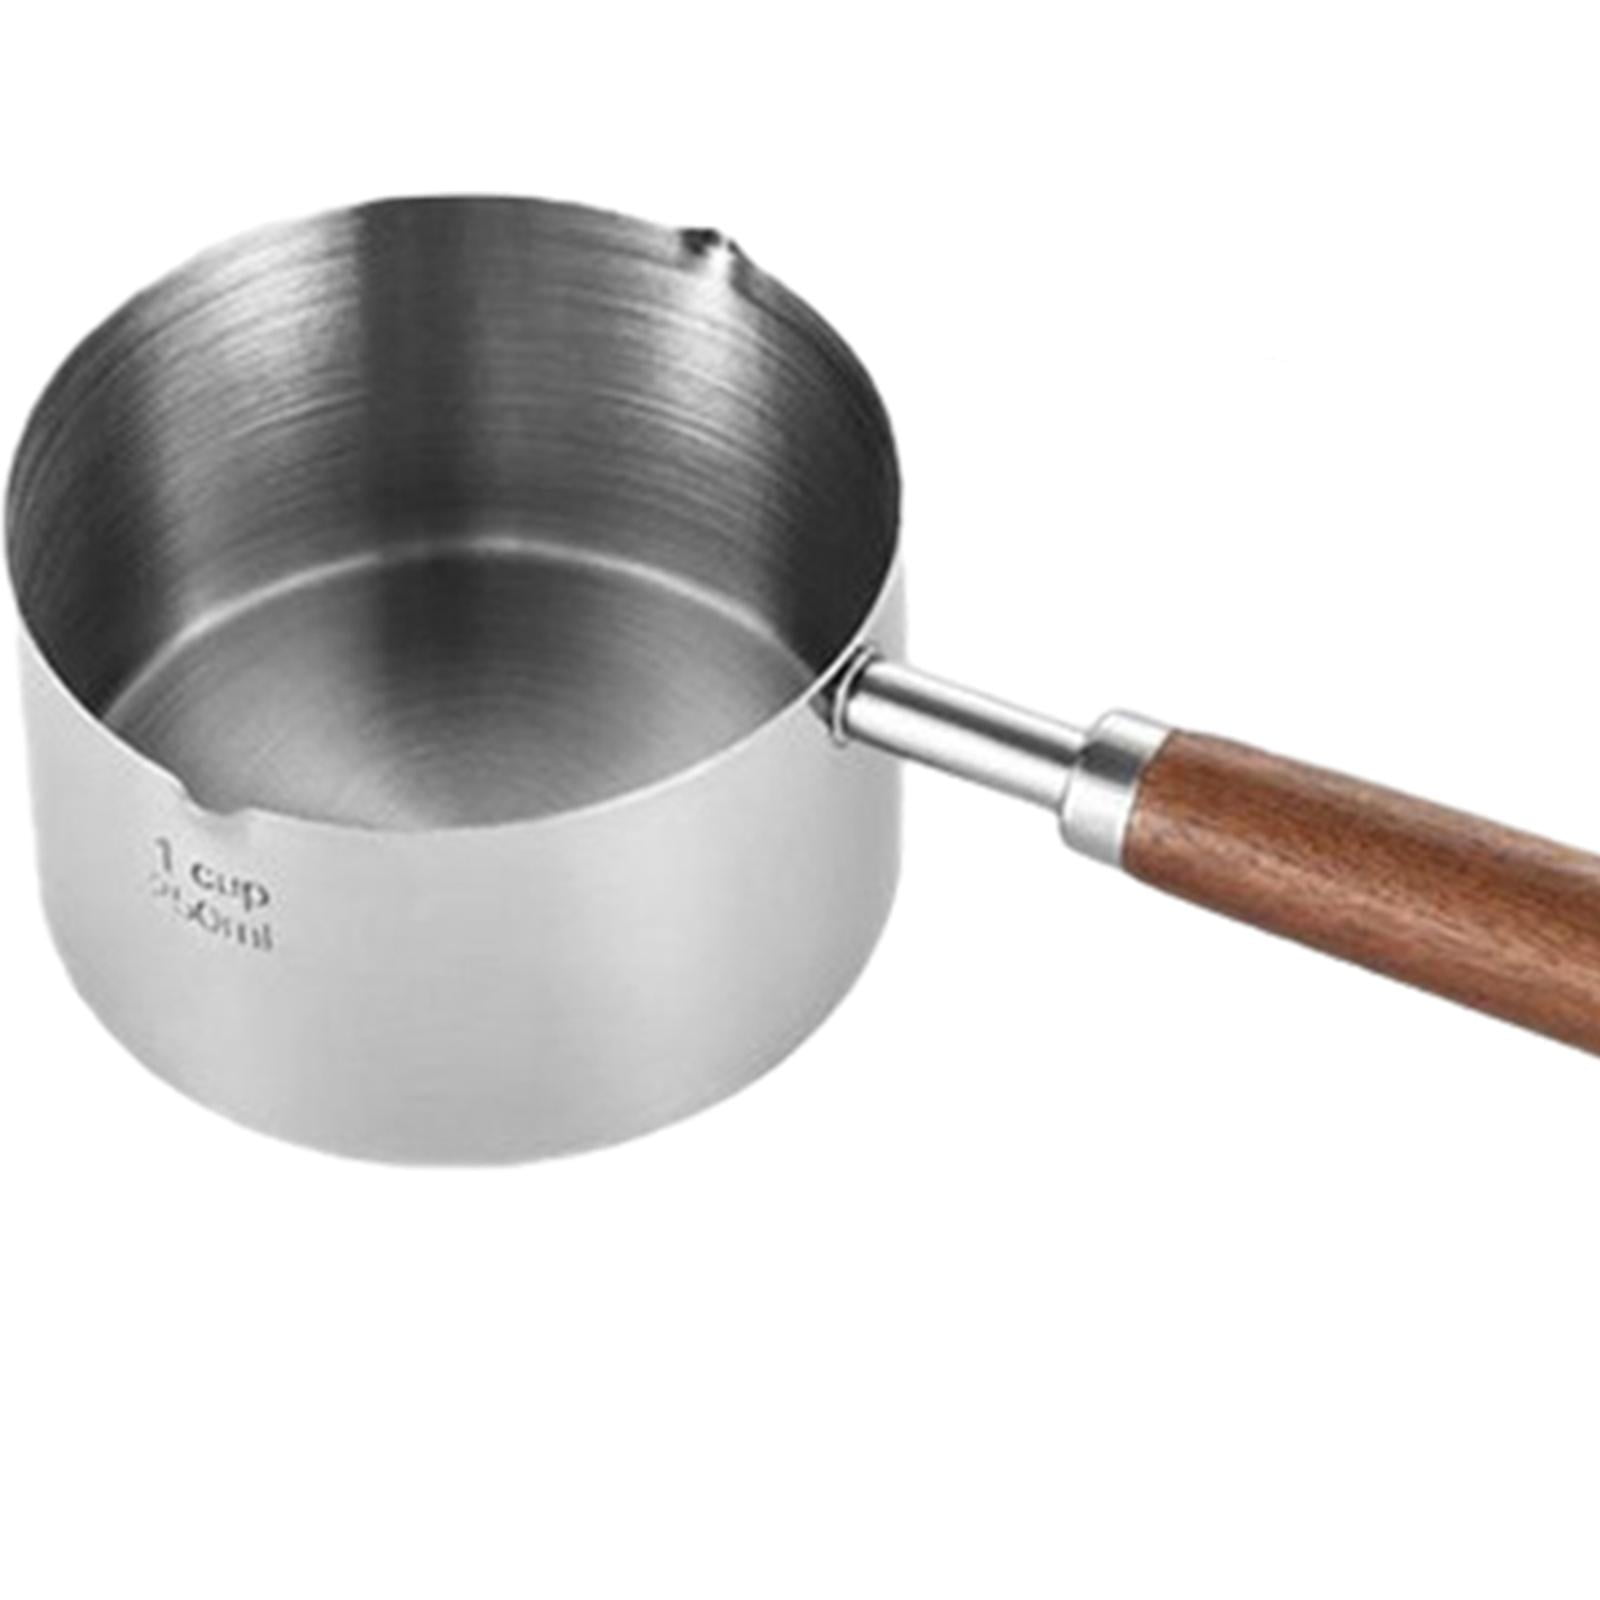 UPKOCH sauce pan butter stainless steel sauce pot pour oil small pan  saucepan pot with pour spout melting pot metal sauce pot with handle small  oil